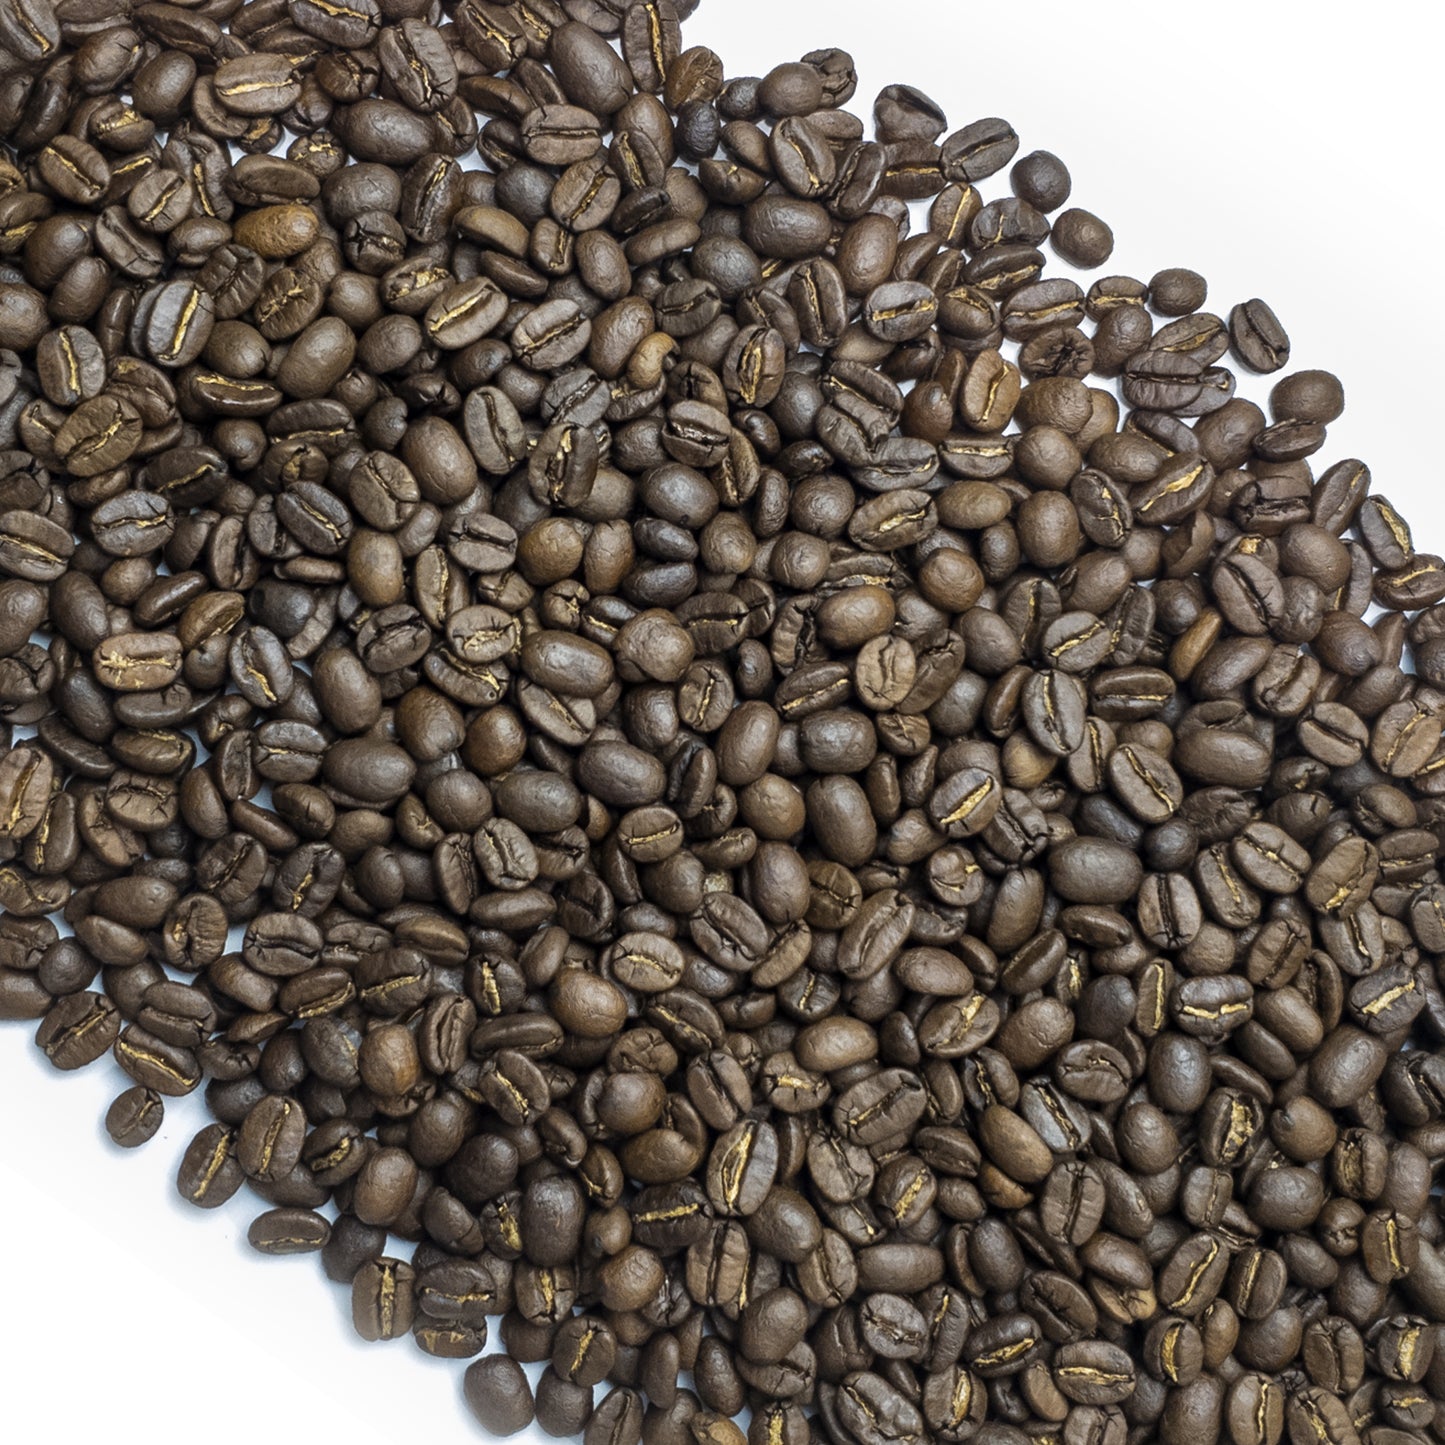 
                  
                    Old World Italian Coffee | Single Serve Craft Cups | Dark "Italian" Roast | 12ct | 24ct | 36ct | 48ct | 72ct | 96ct
                  
                